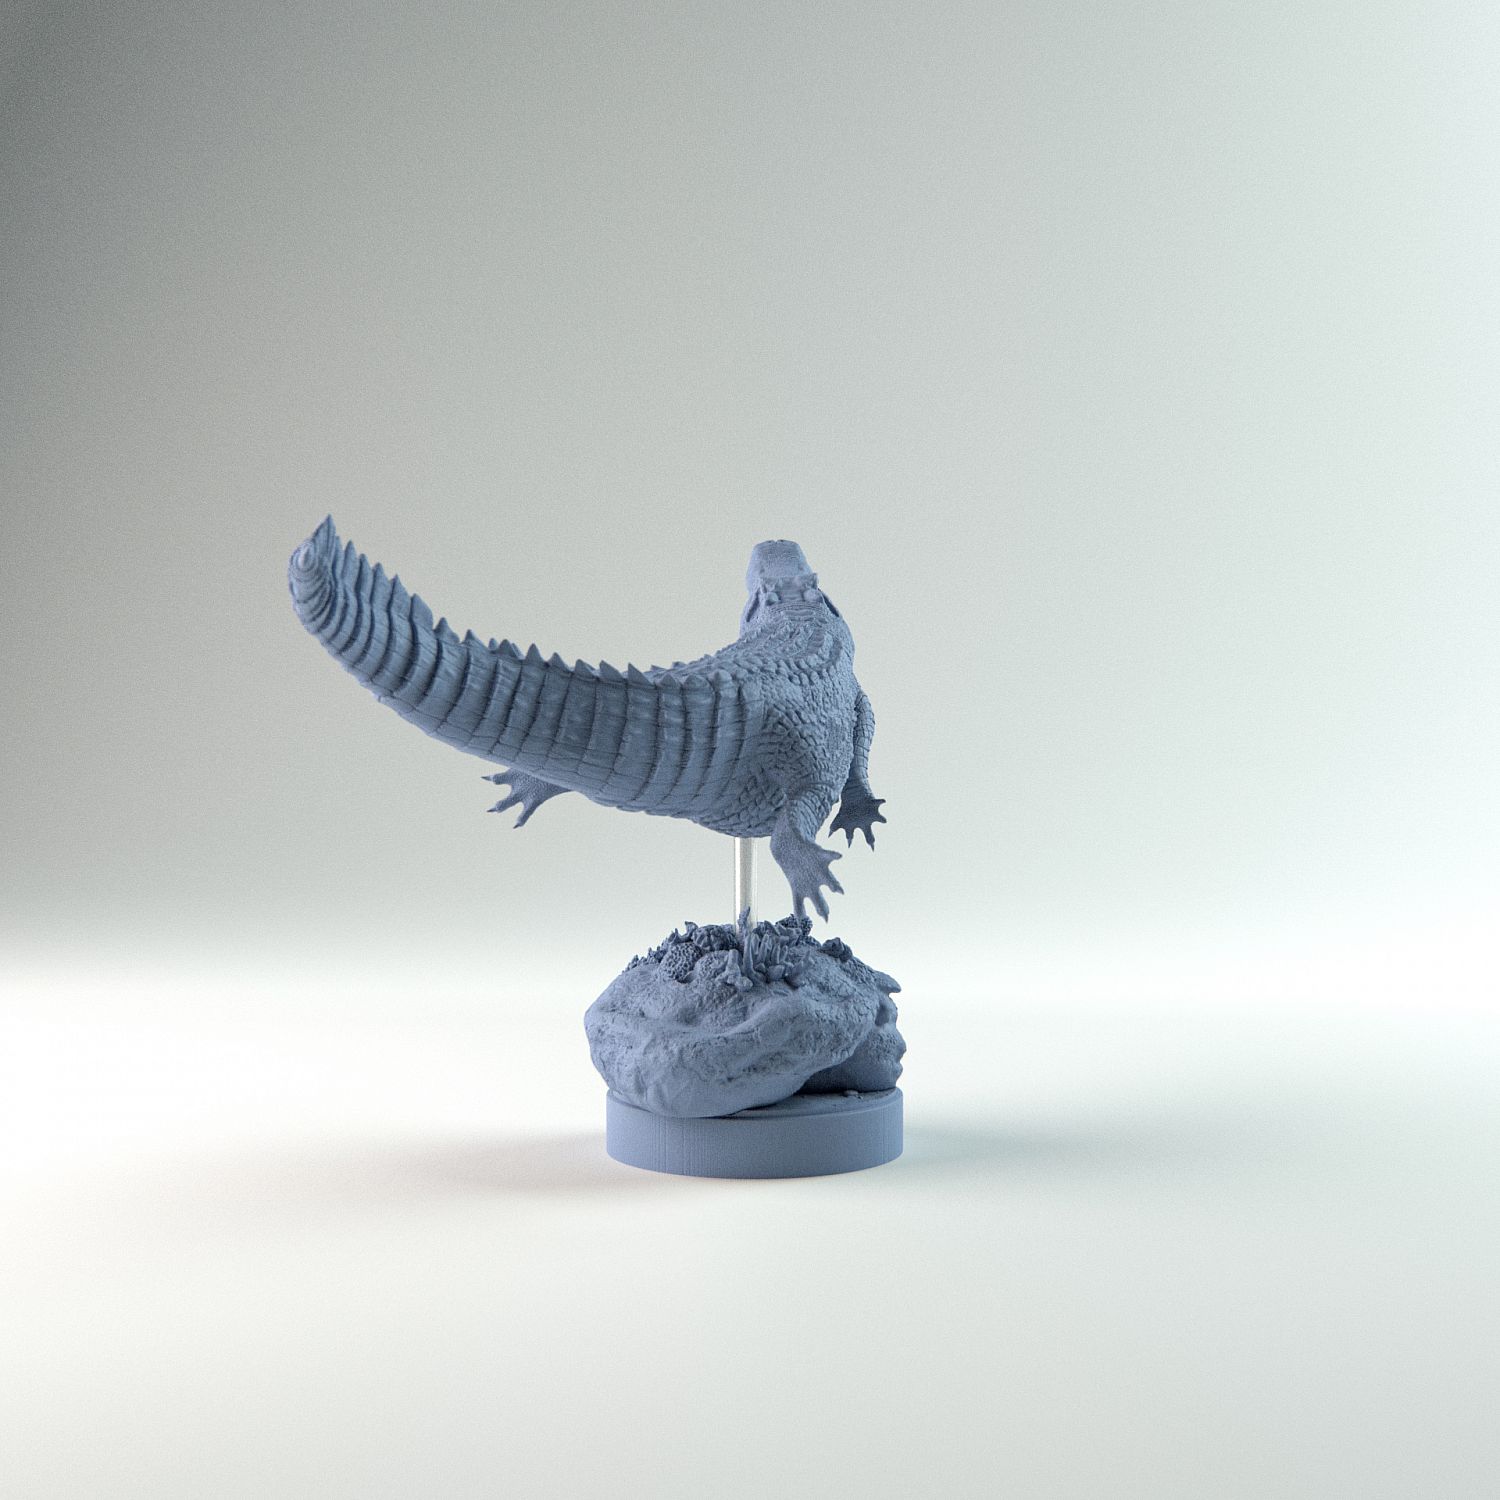 Deinosuchus walking - pre-supported 3D model 3D printable